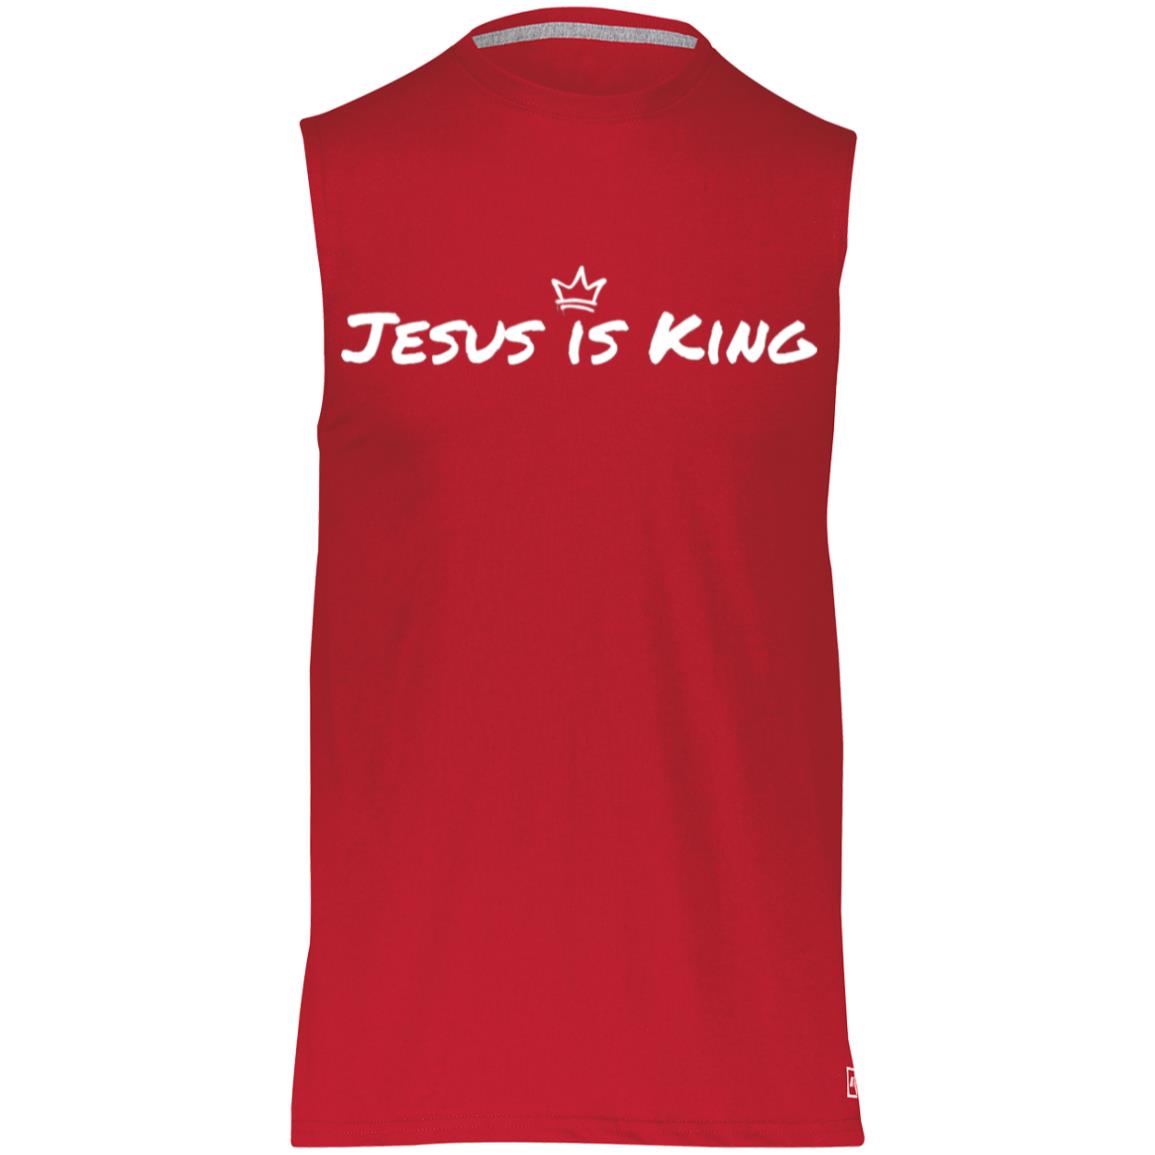 Jesus is King Dri-Power Sleeveless Muscle Tee